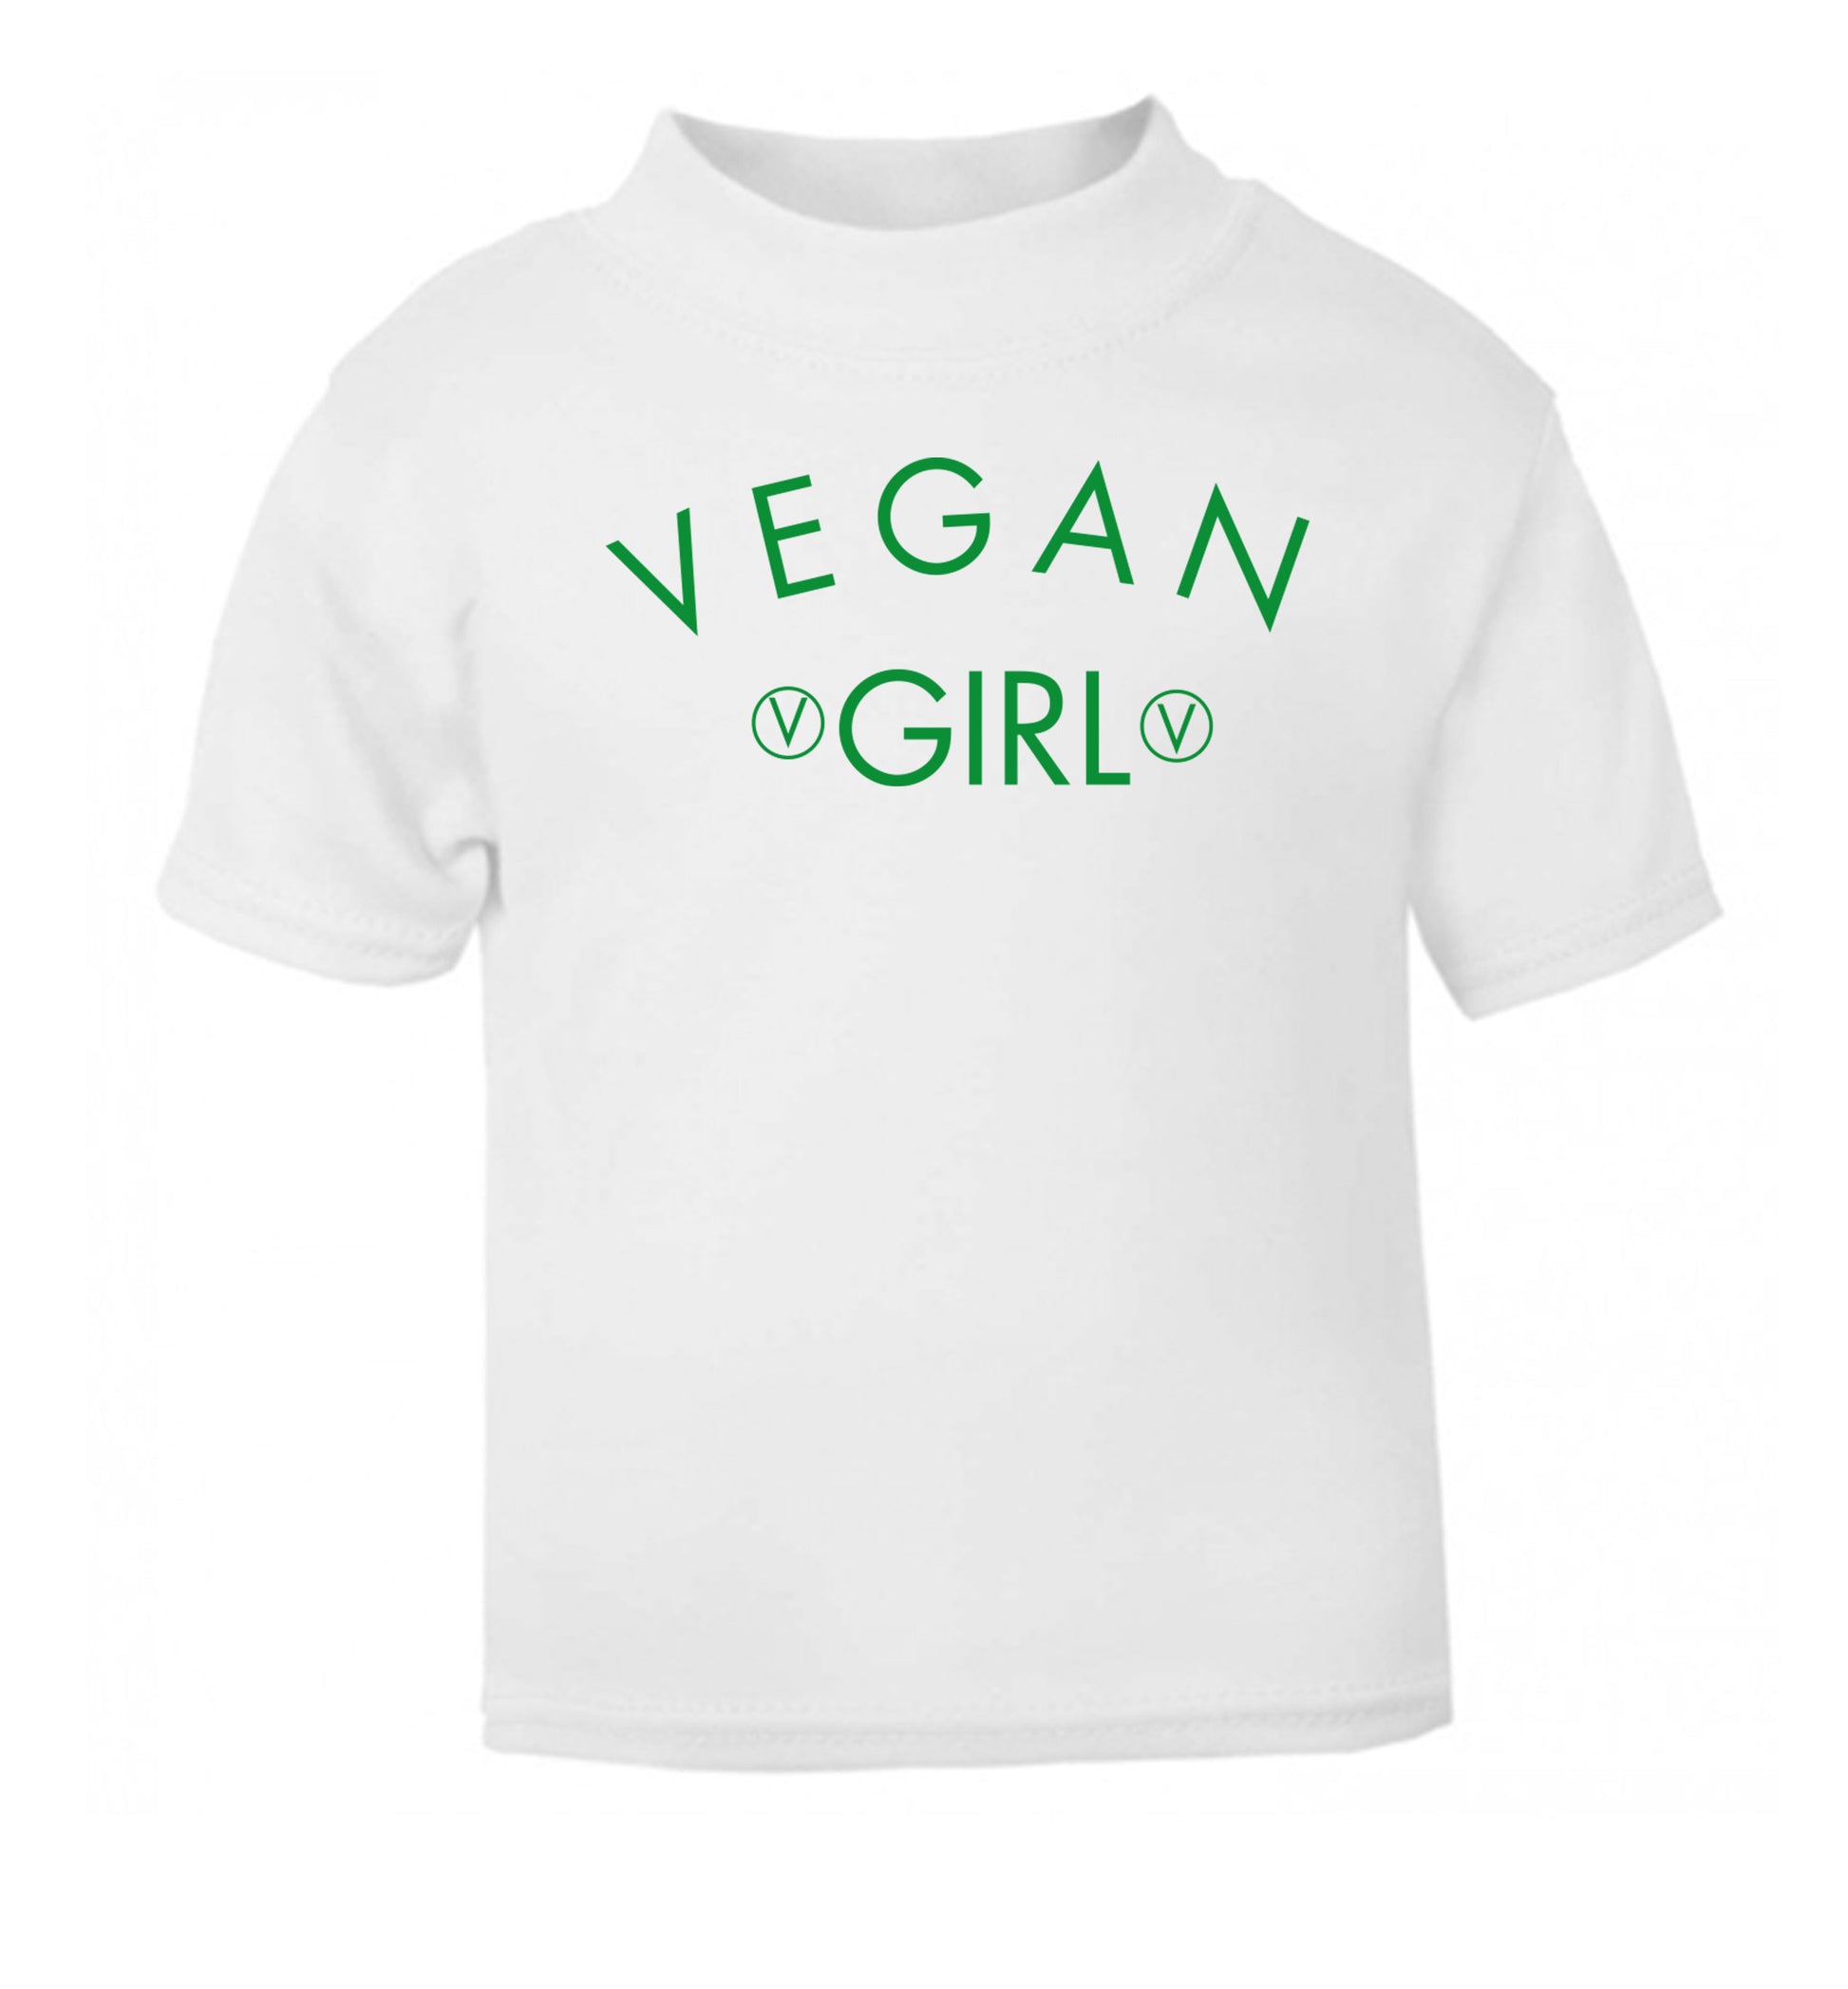 Vegan girl white Baby Toddler Tshirt 2 Years